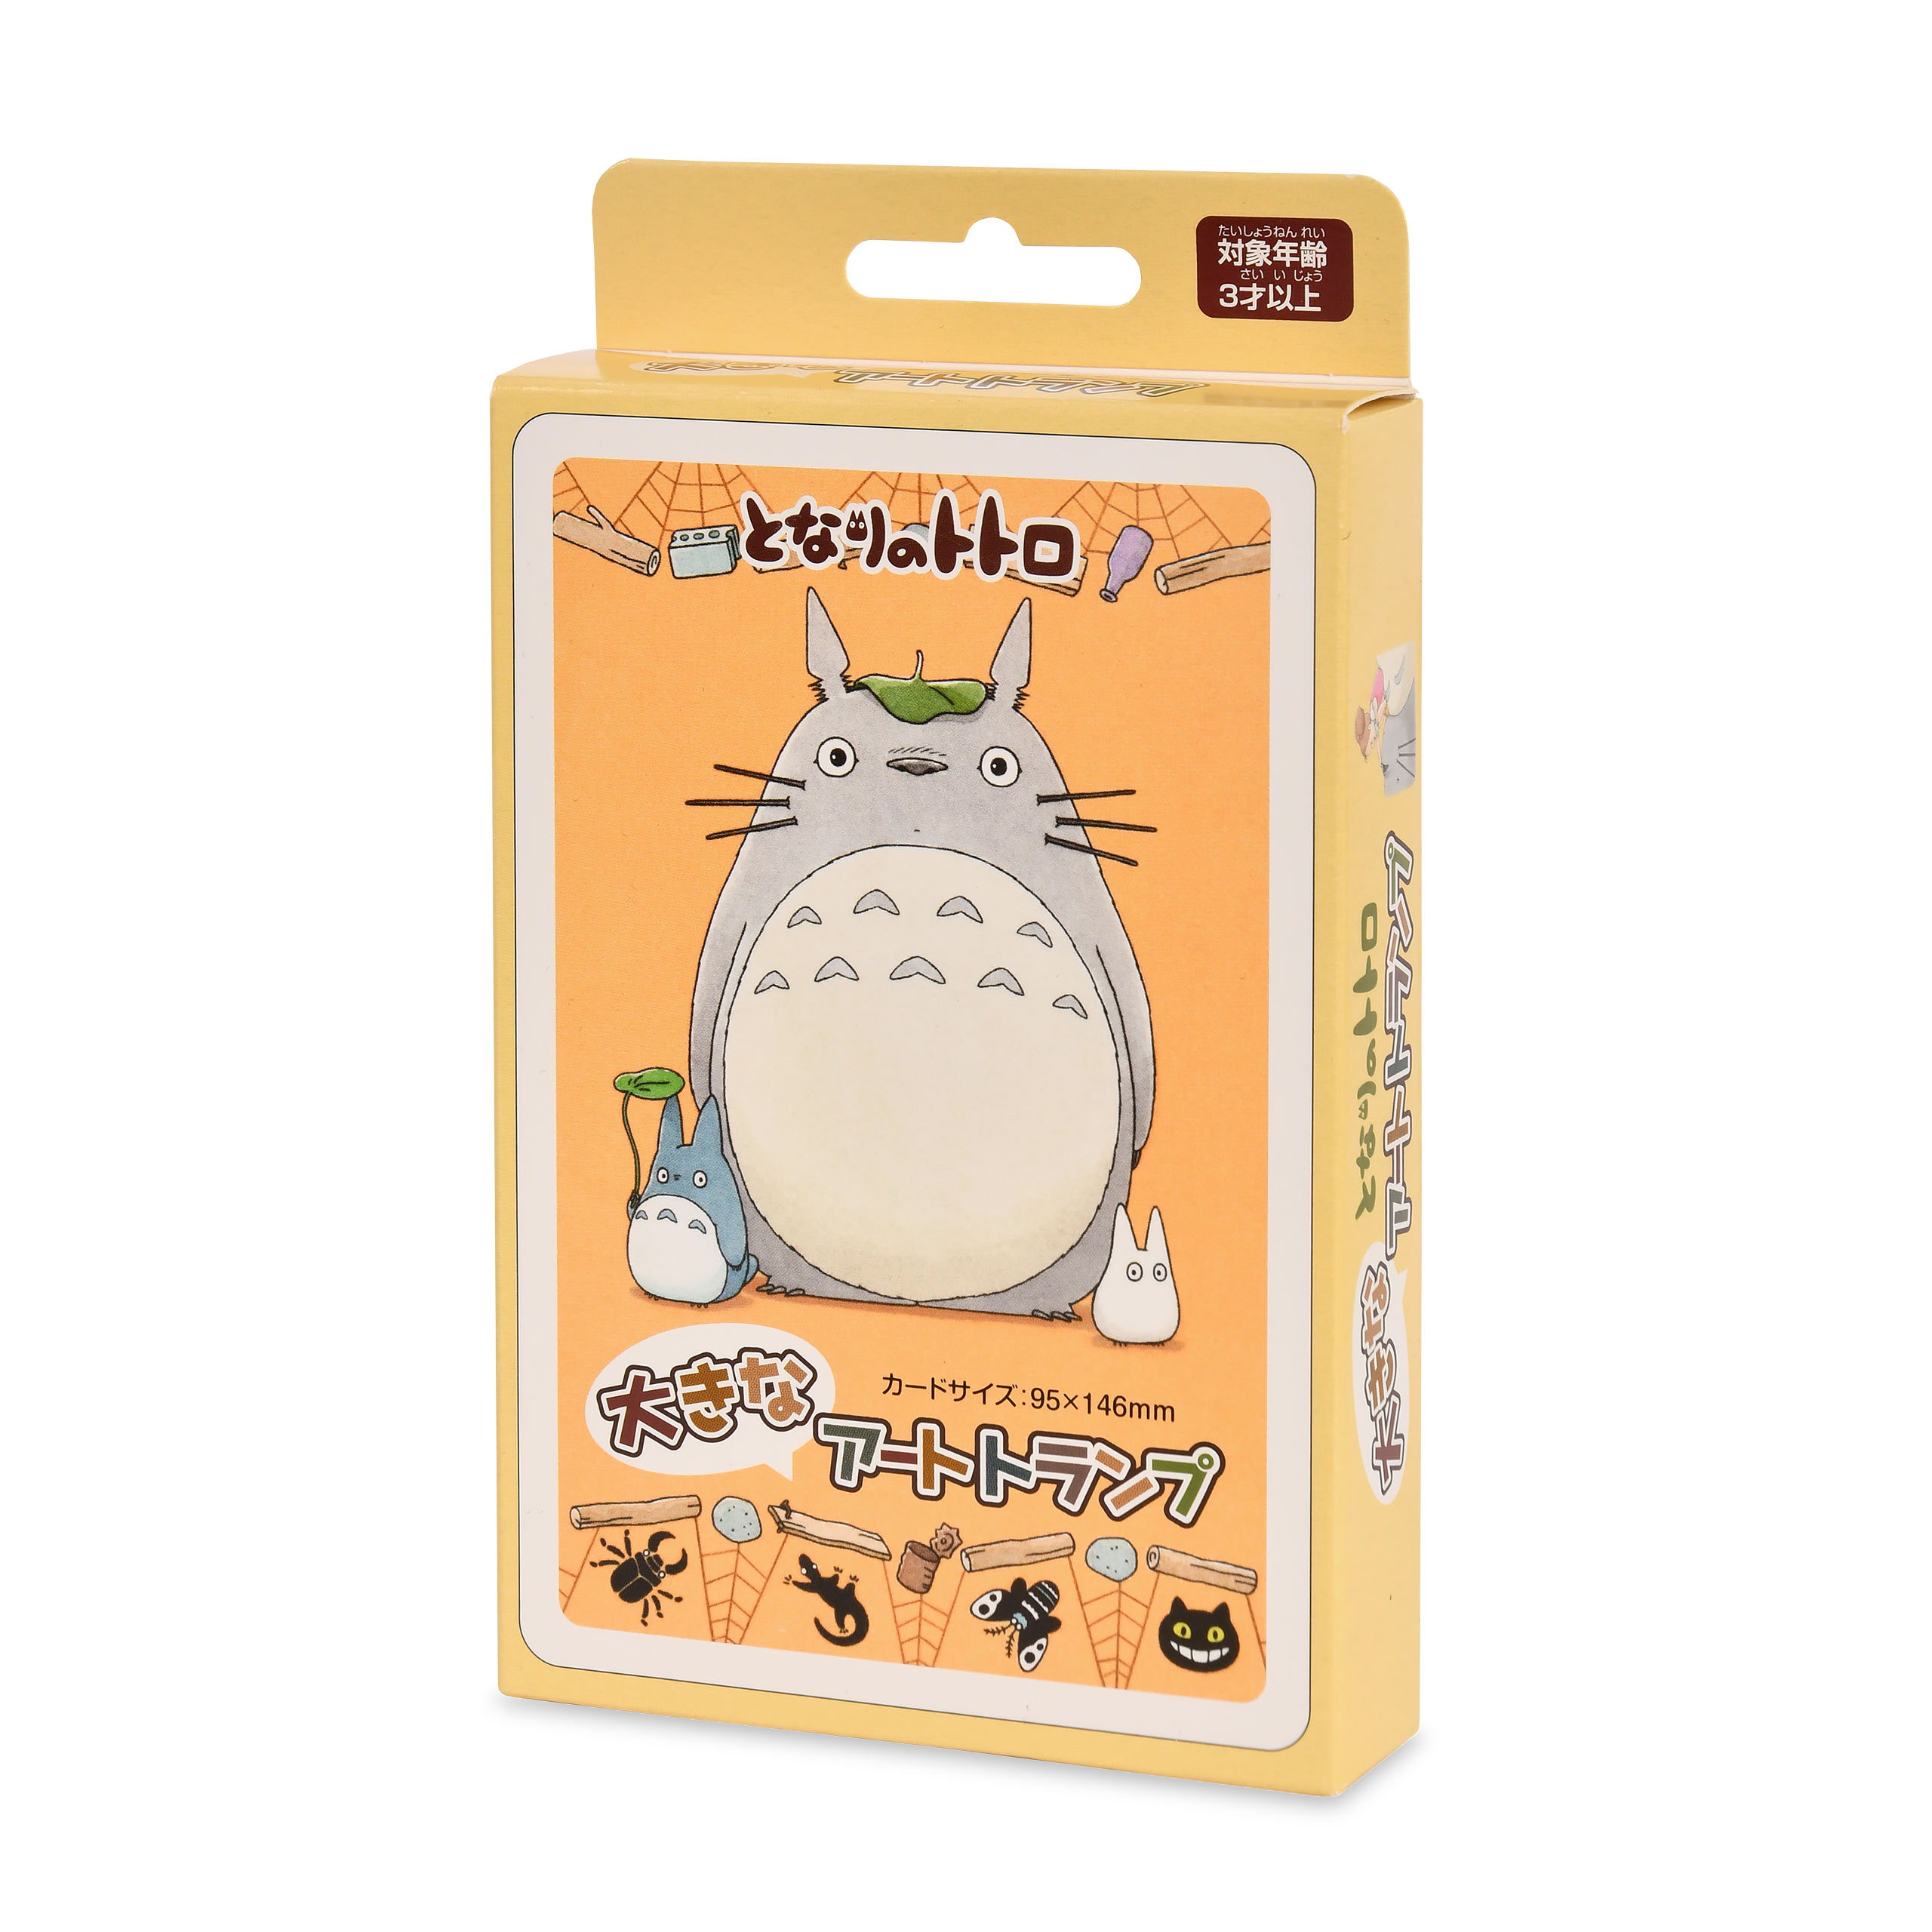 Totoro - Spielkarten XXL